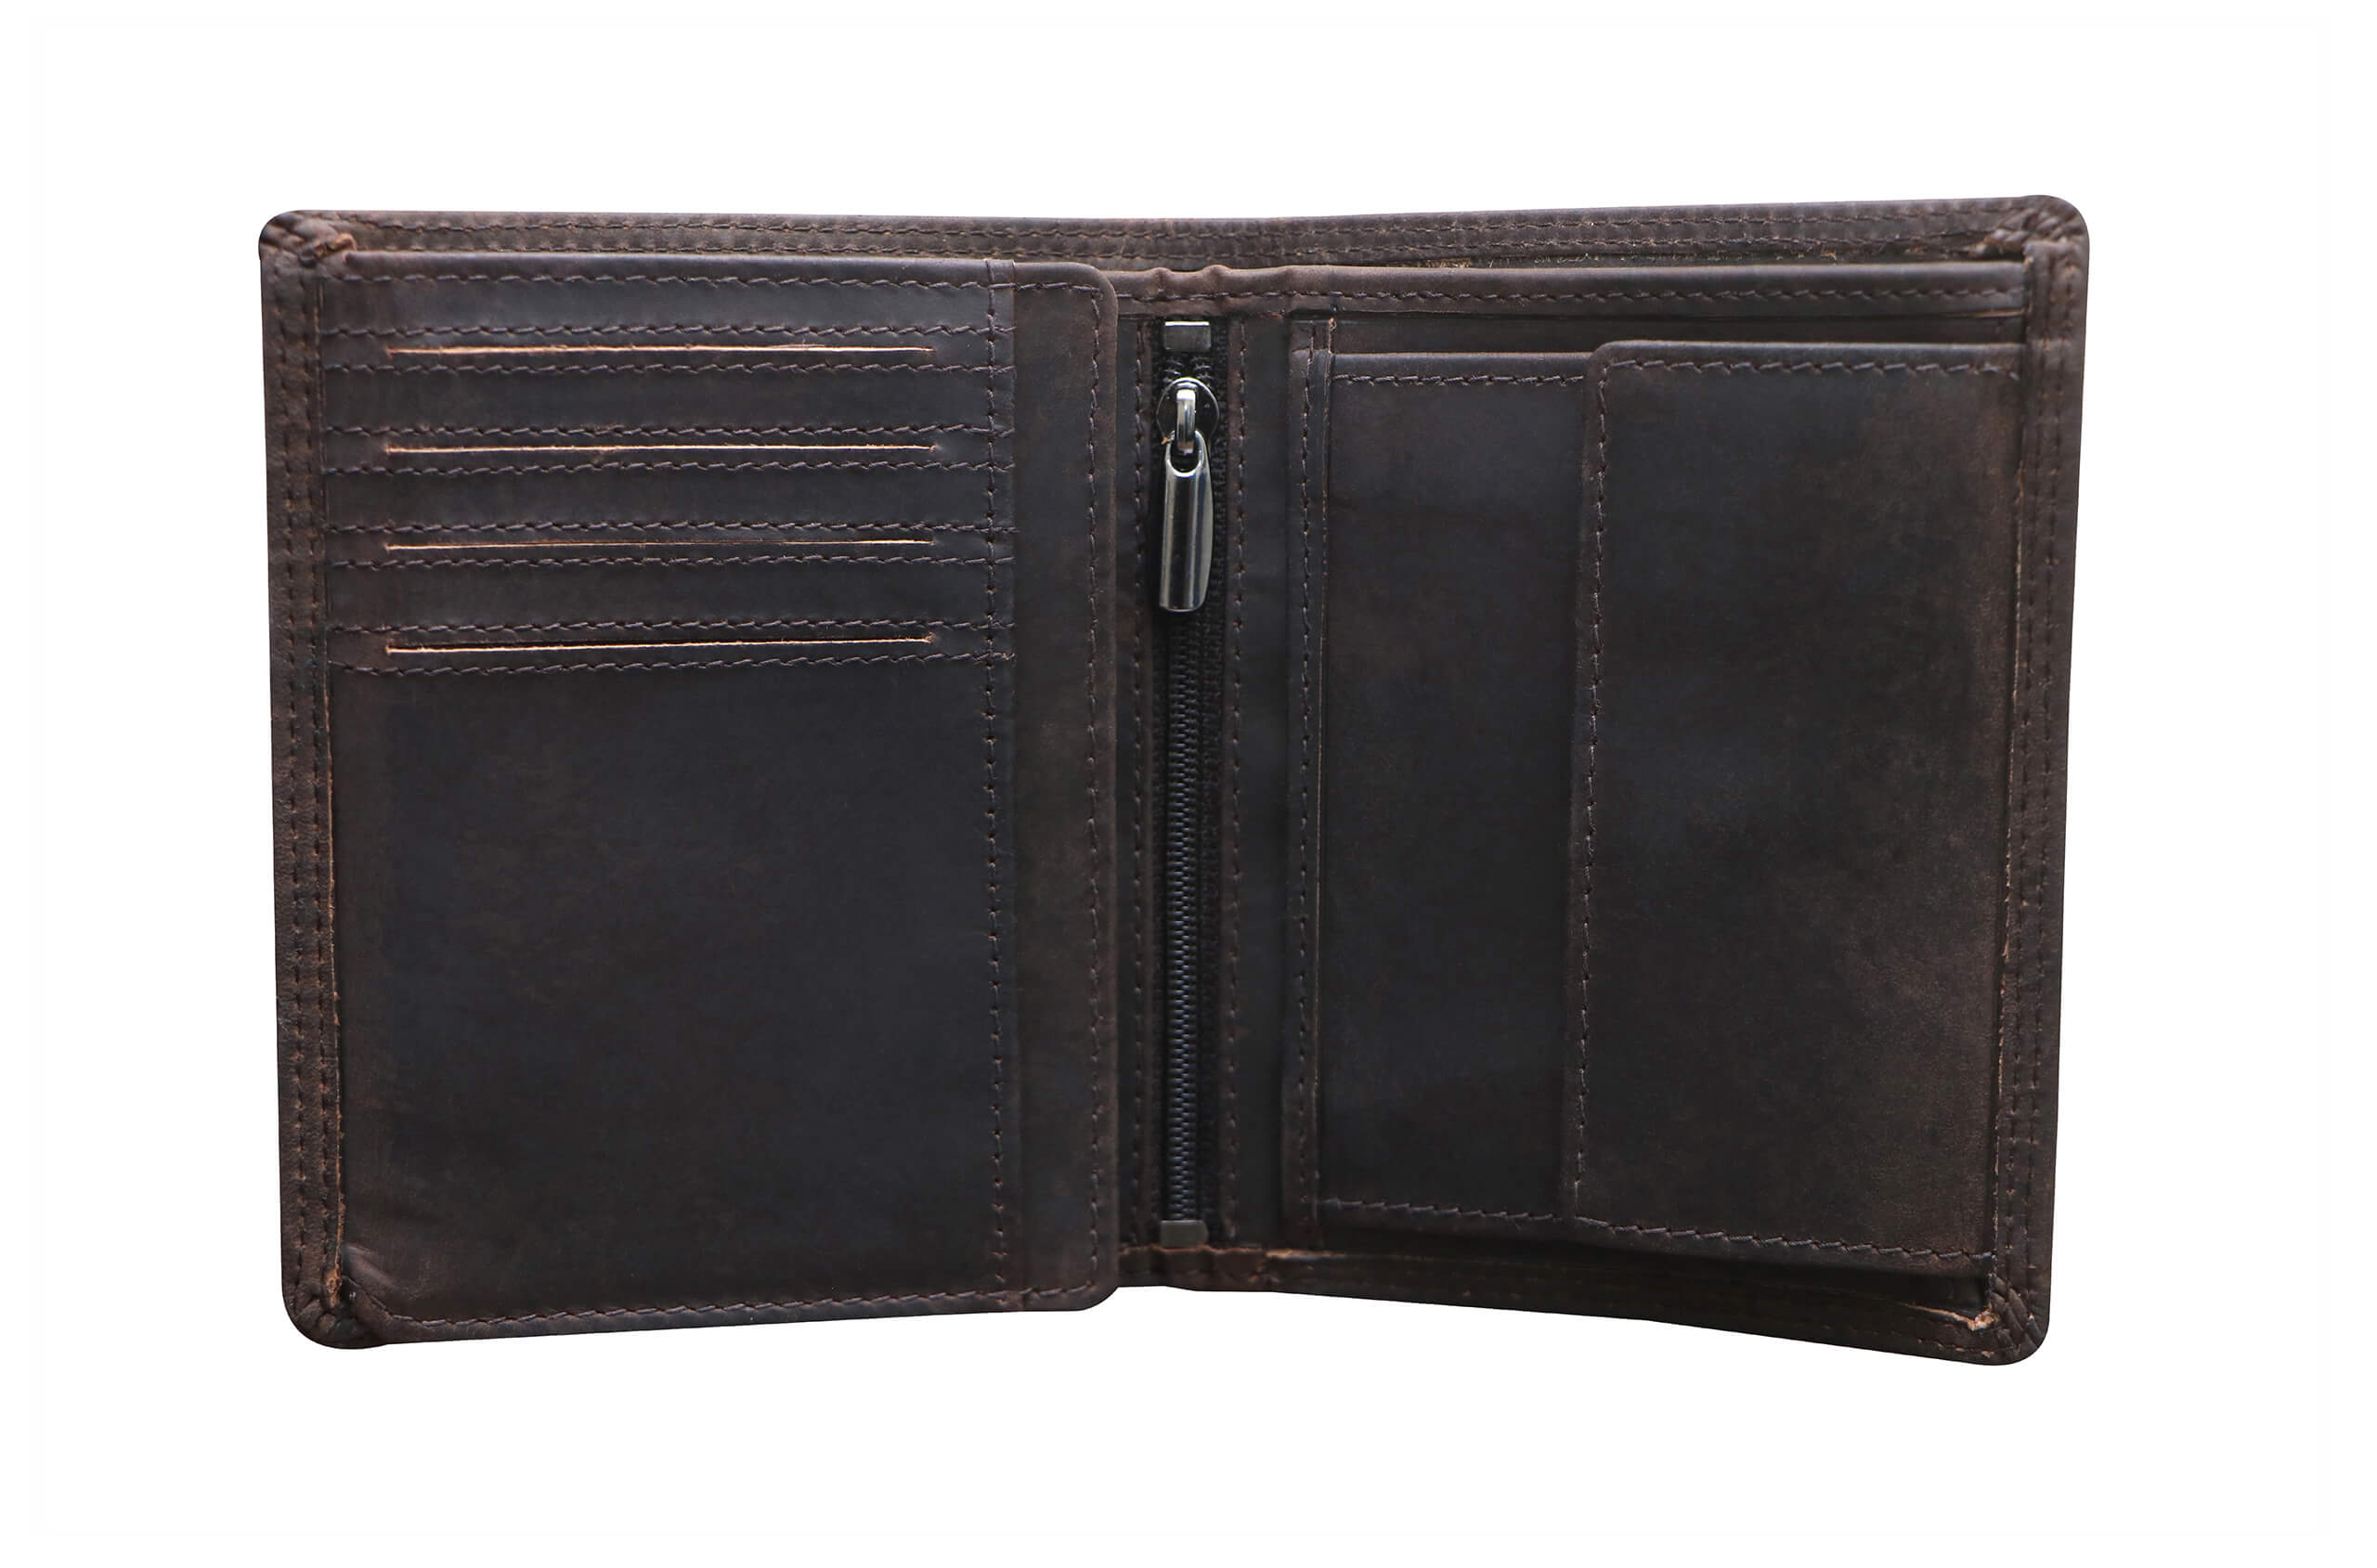 Genuine Leather Wallet Mens Gents Wallet Leather Purse Black